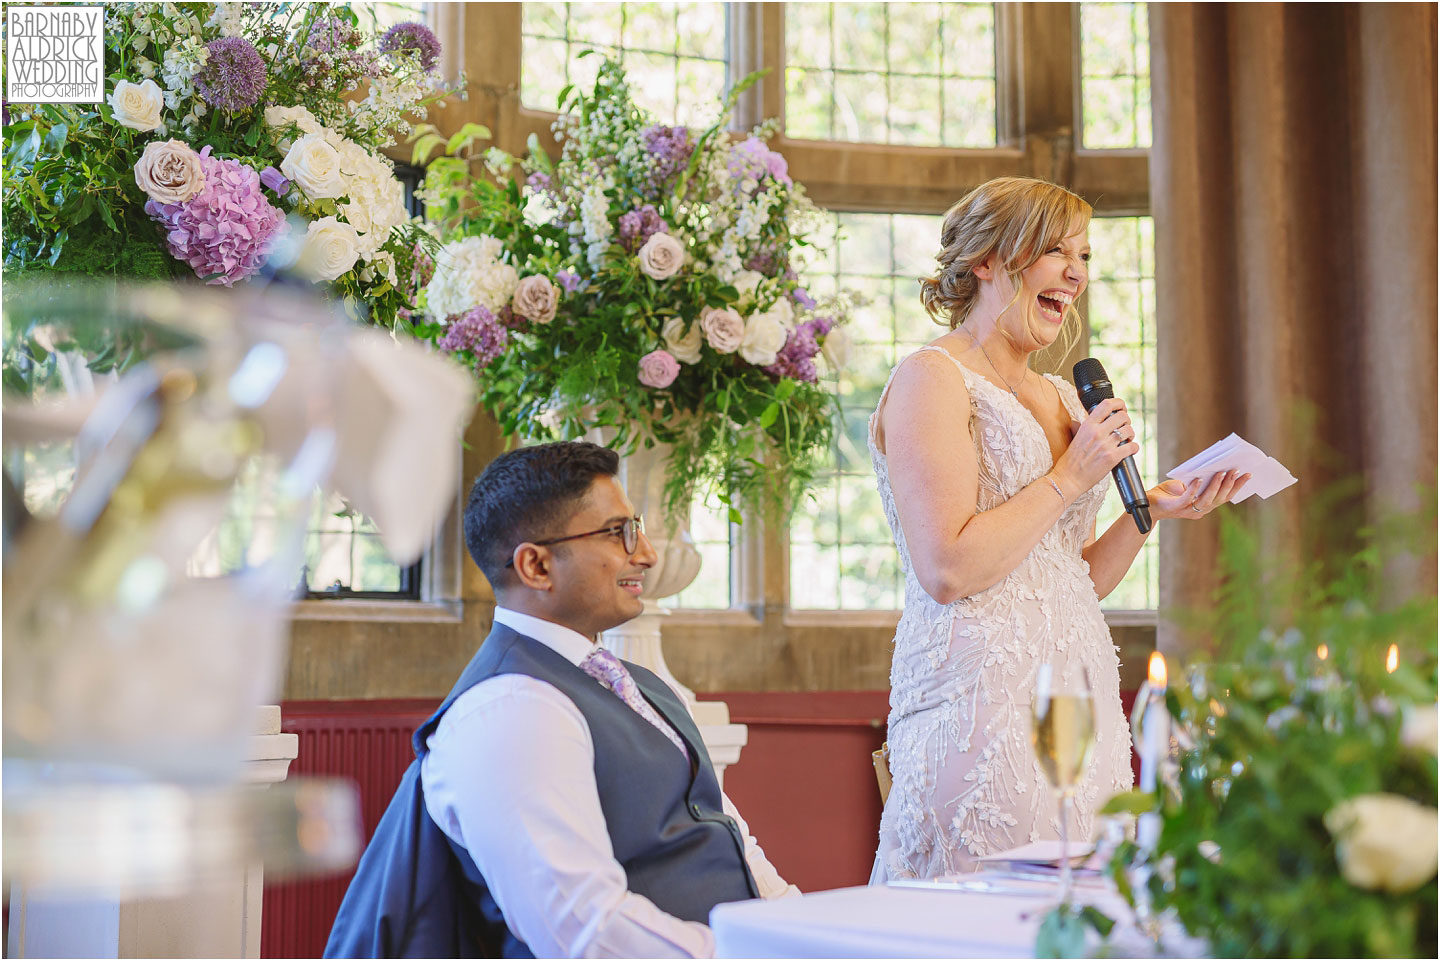 Candid wedding speech photos at Thornbridge Hall by Yorkshire Wedding Photographer Barnaby Aldrick